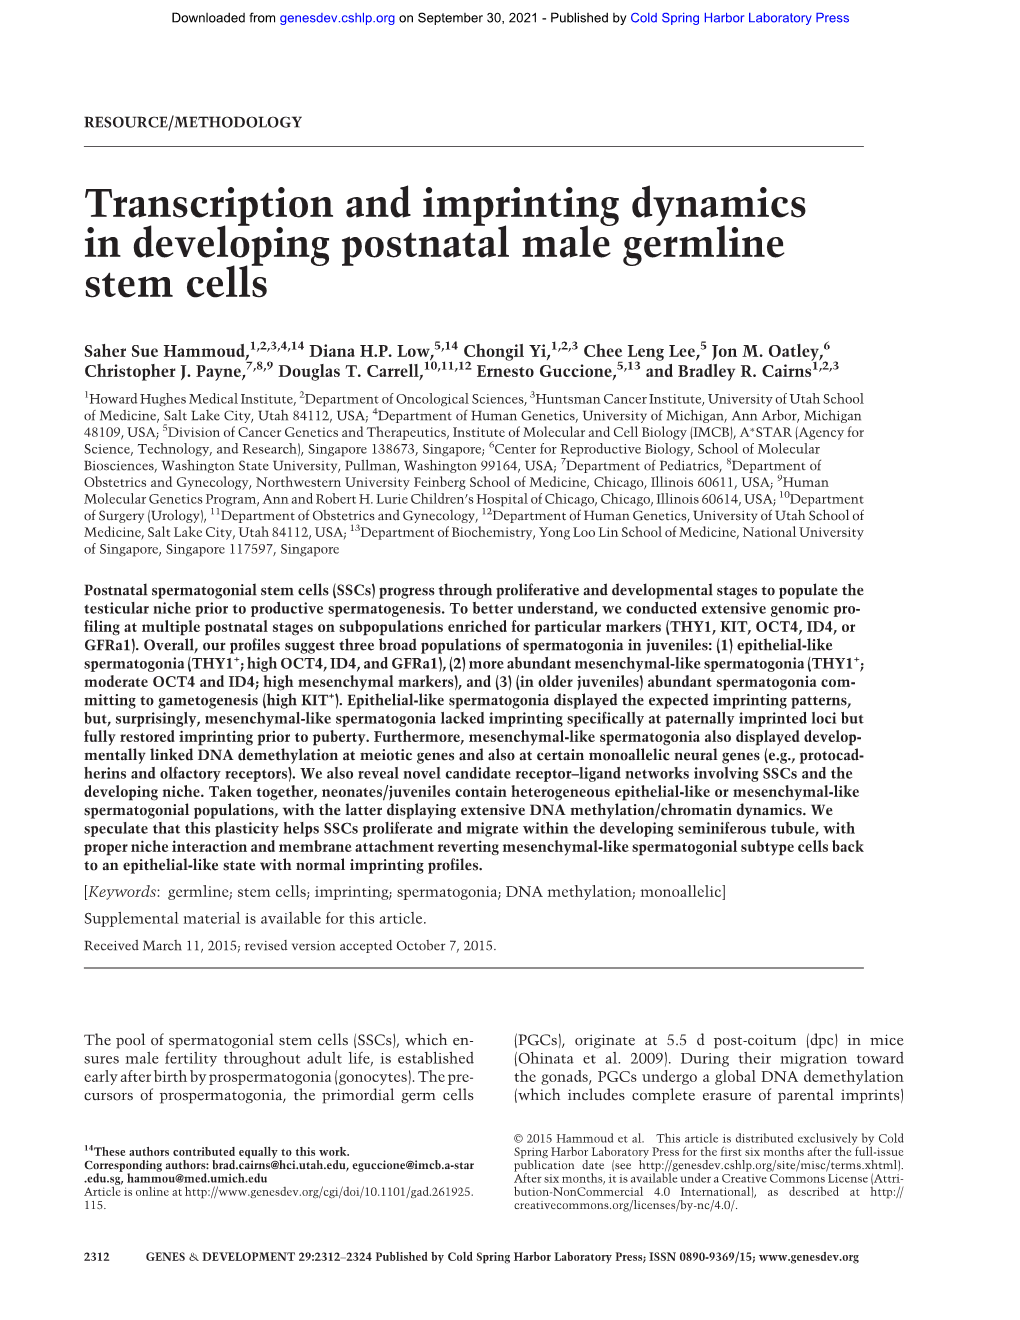 Transcription and Imprinting Dynamics in Developing Postnatal Male Germline Stem Cells